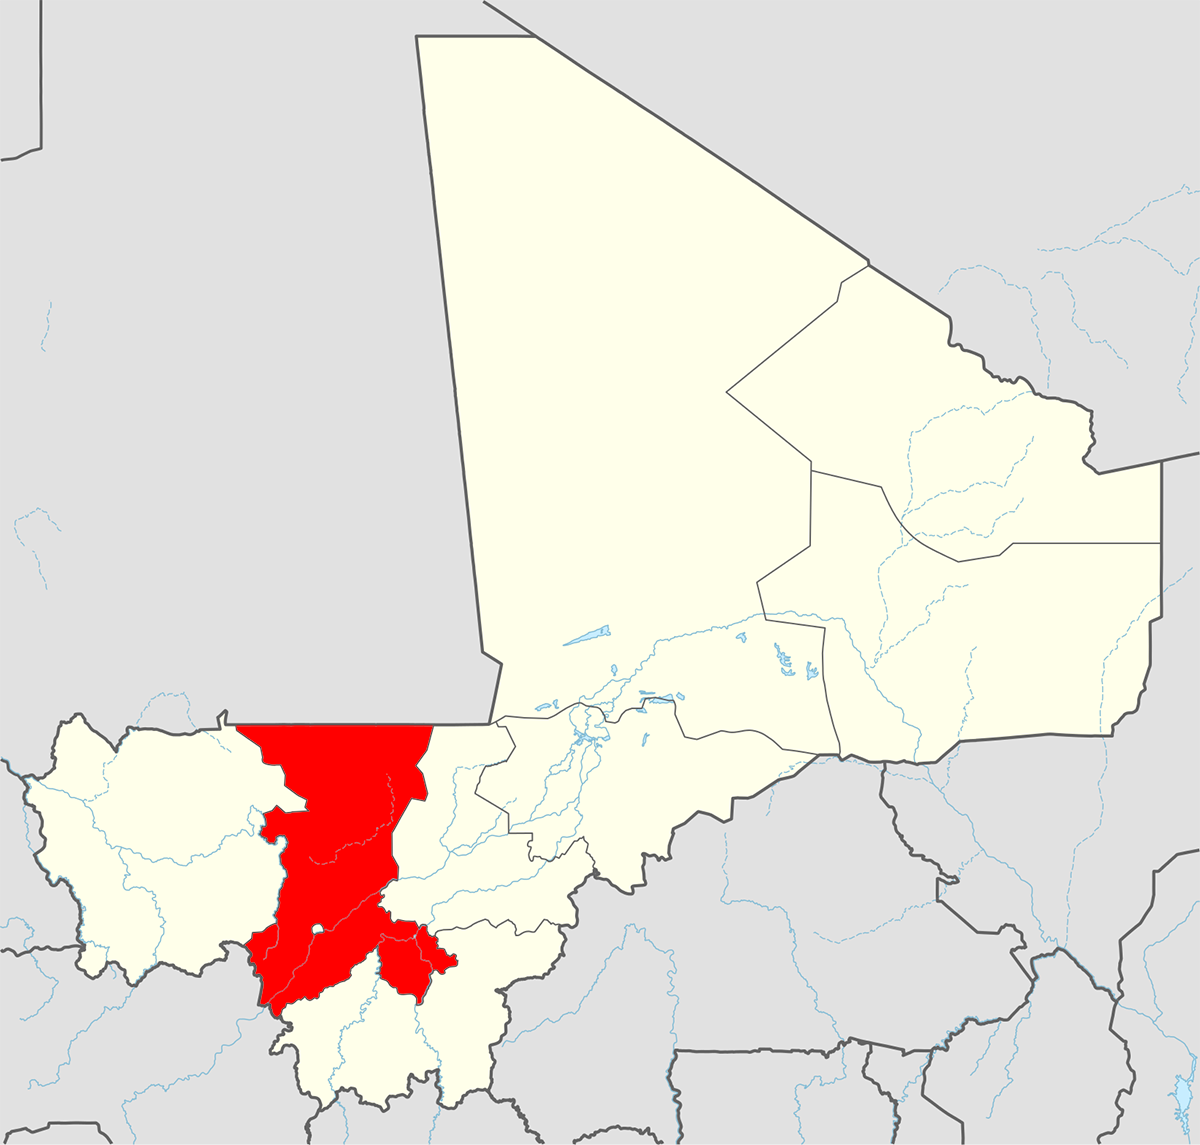 Karte Mali mit farblich markierter Region Koulikoro